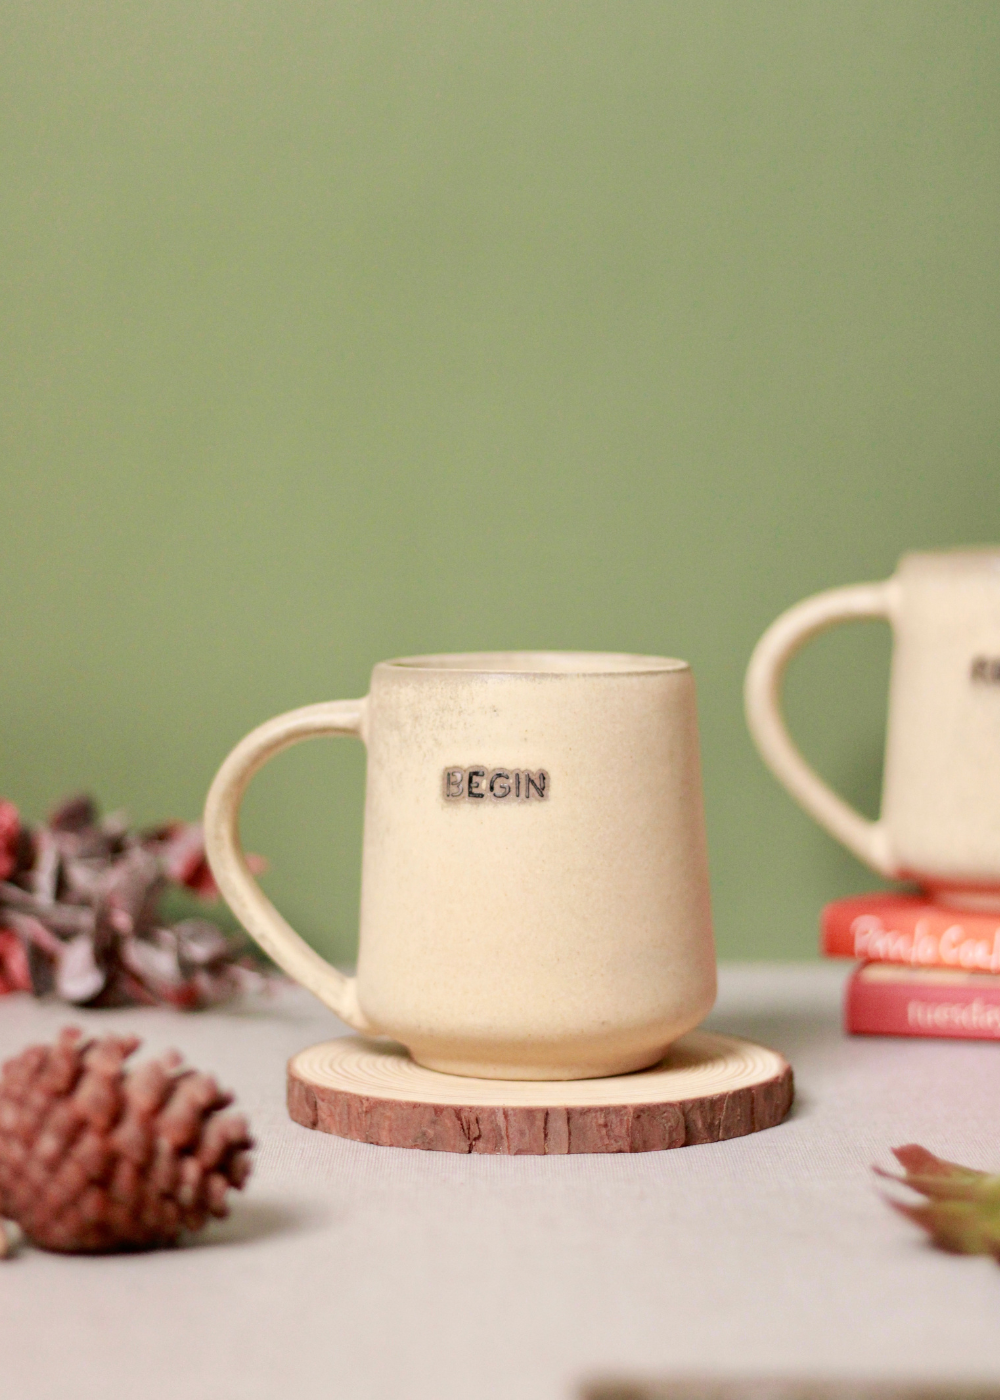 Begin coffee mug on wooden surface 